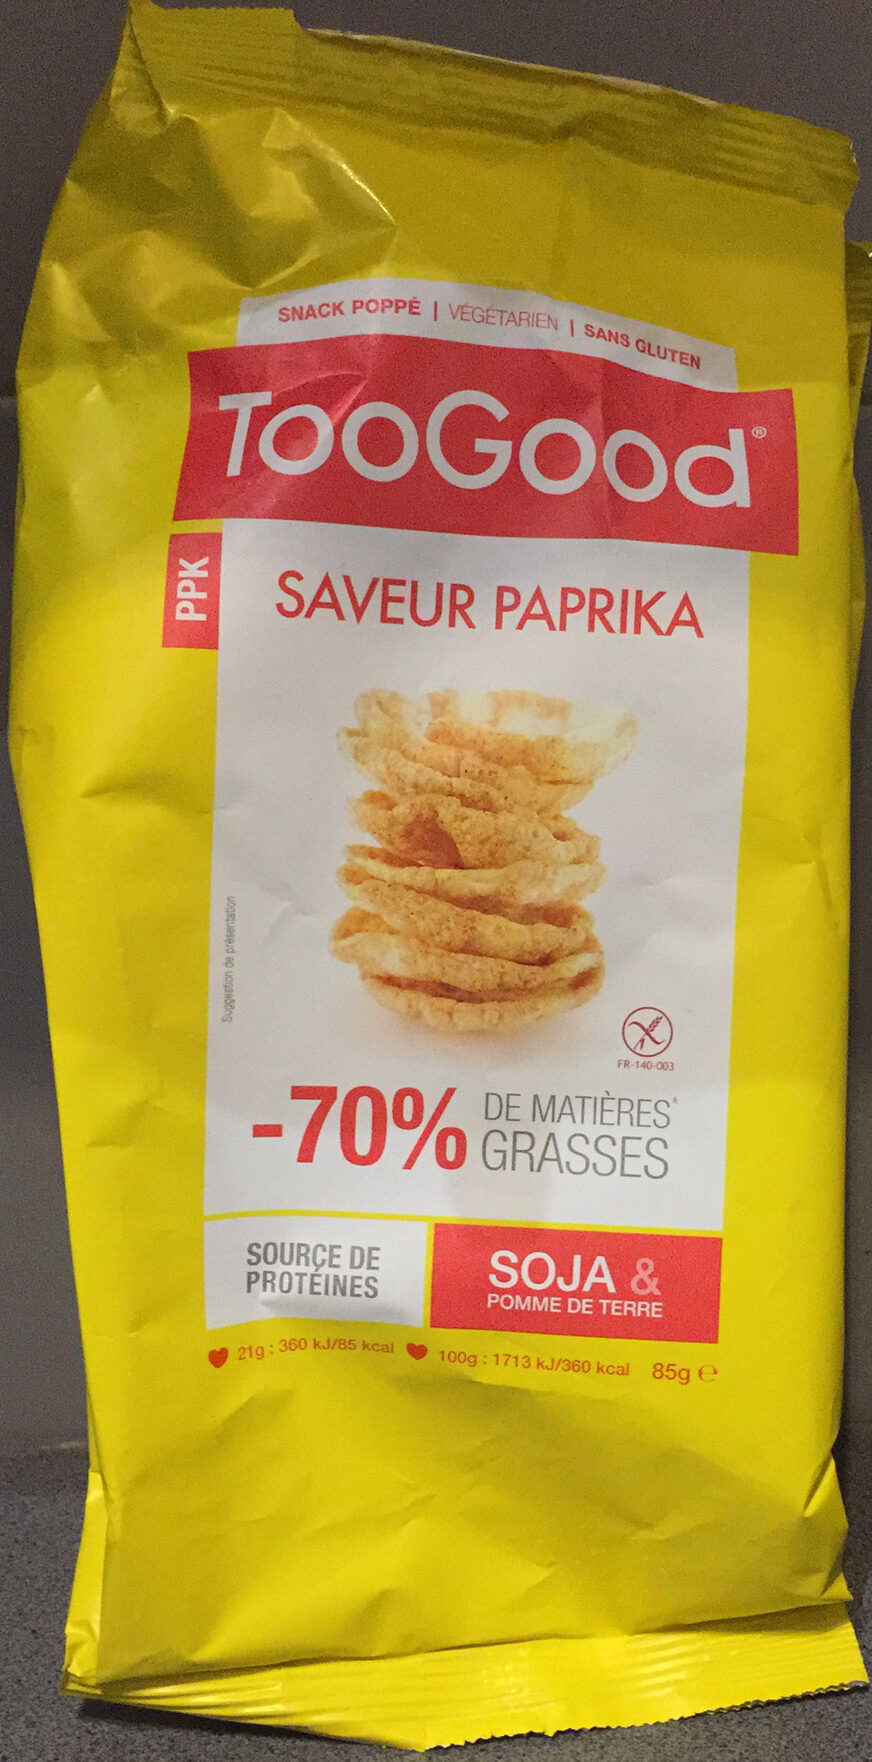 Snack poppé saveur paprika - Produit